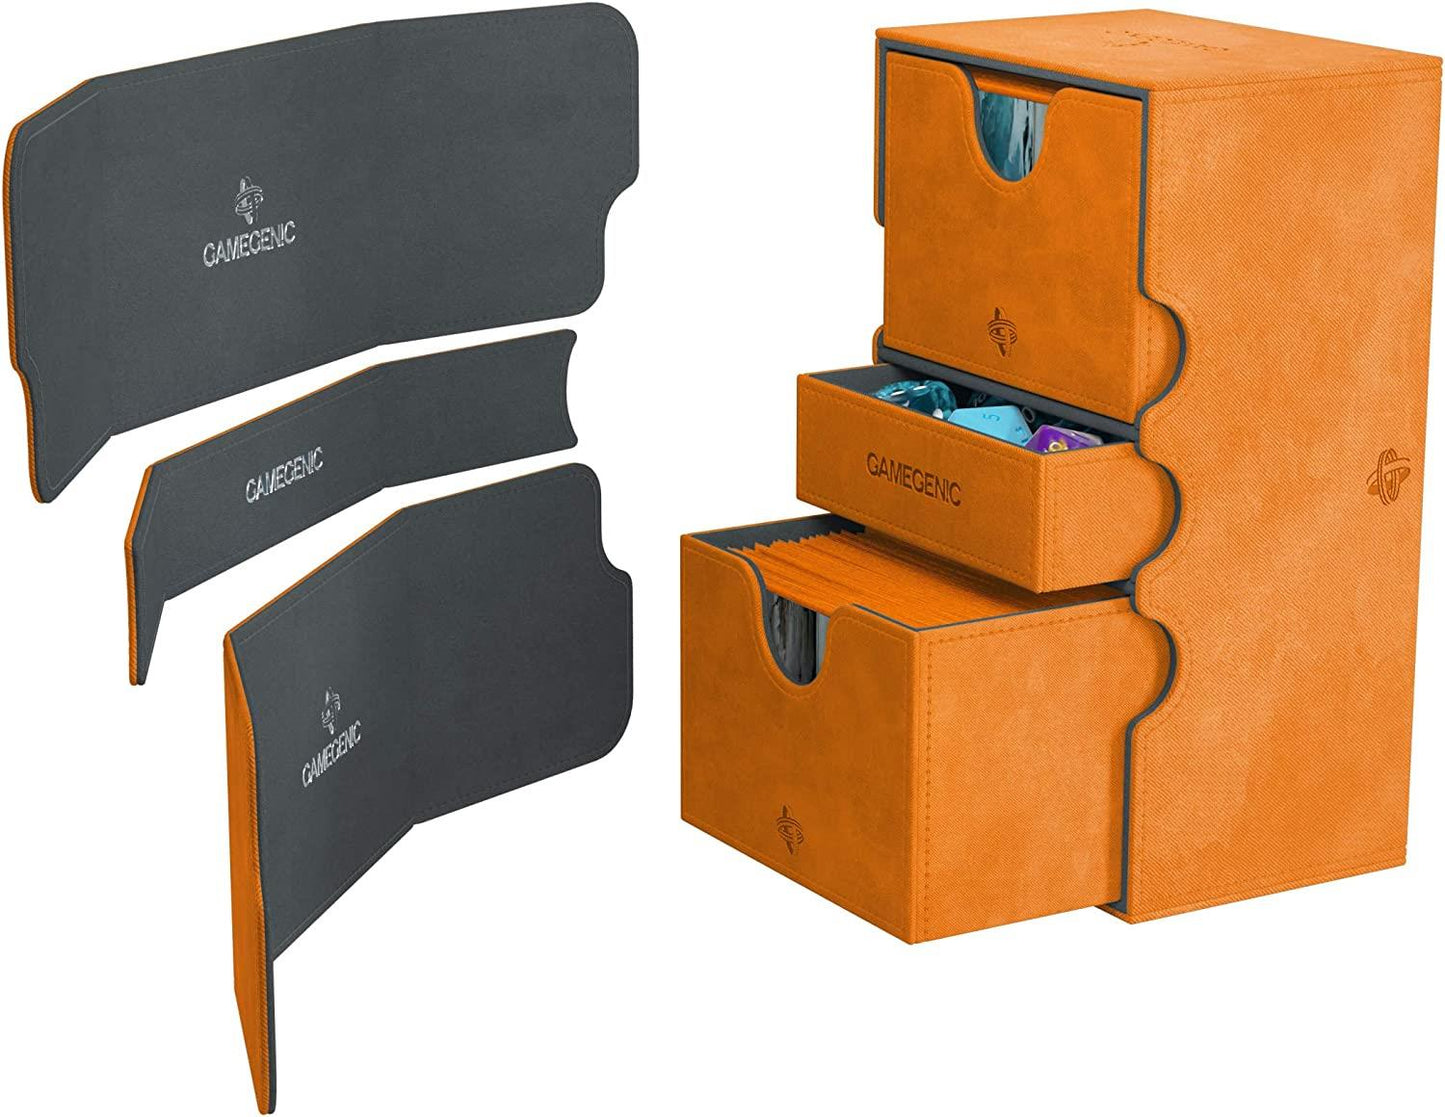 Stronghold Deck Box 200+ - Orange    TCG Gamegenic